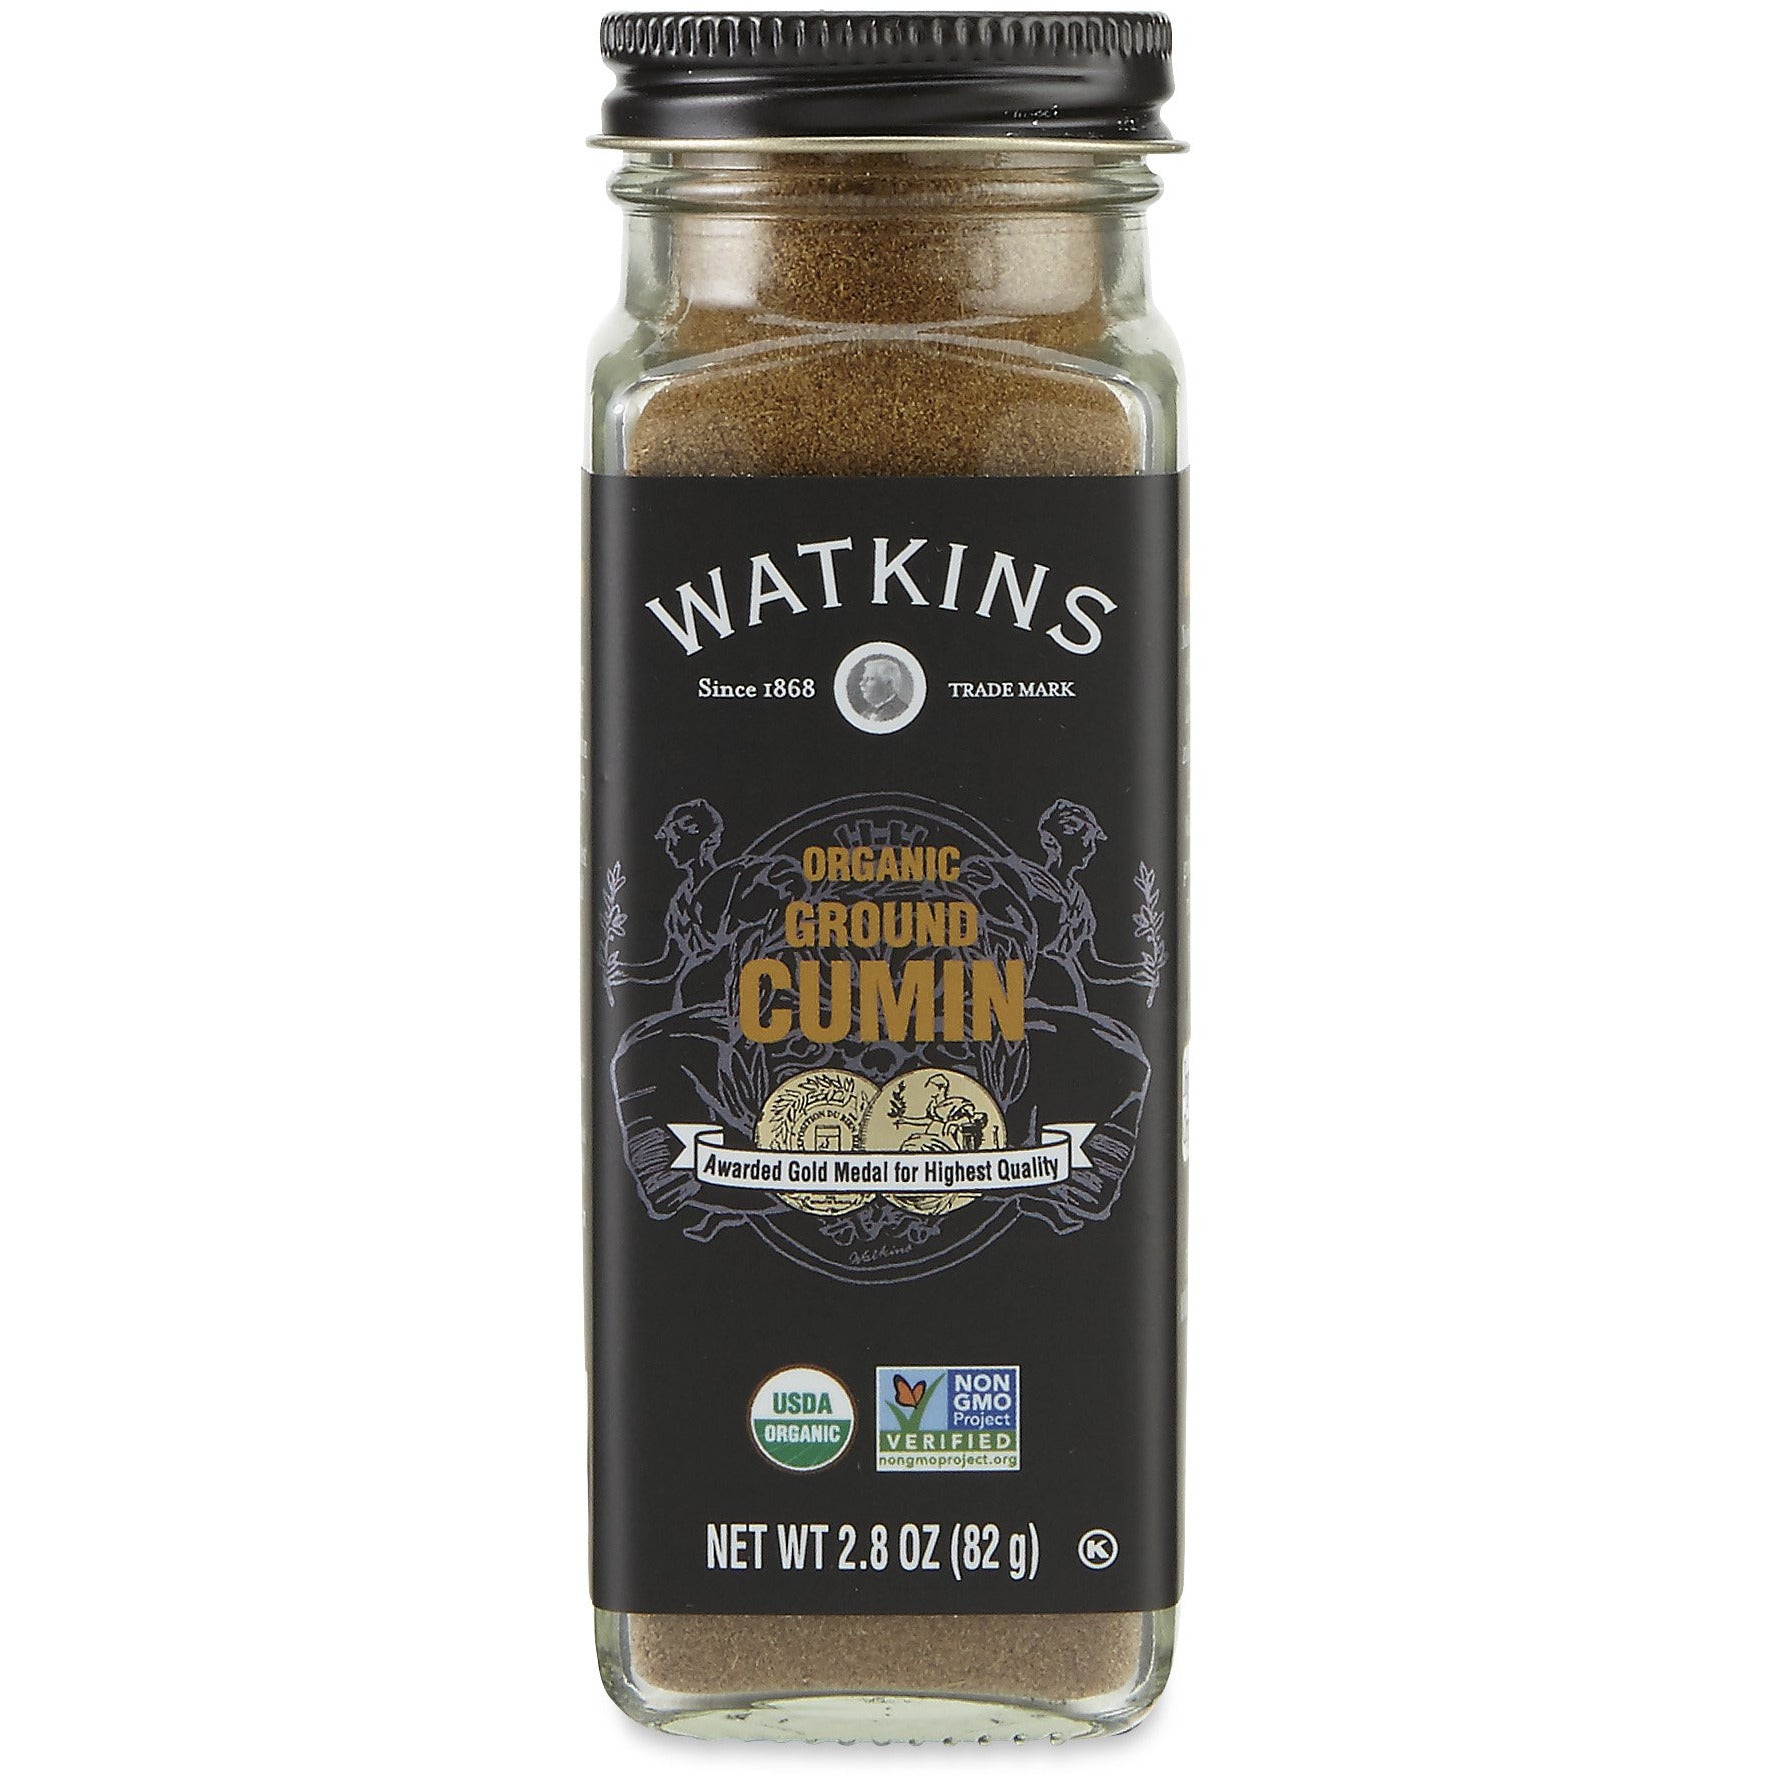 Watkins Gourmet Organic Spice Jar, Ground Cumin (2.8 oz)